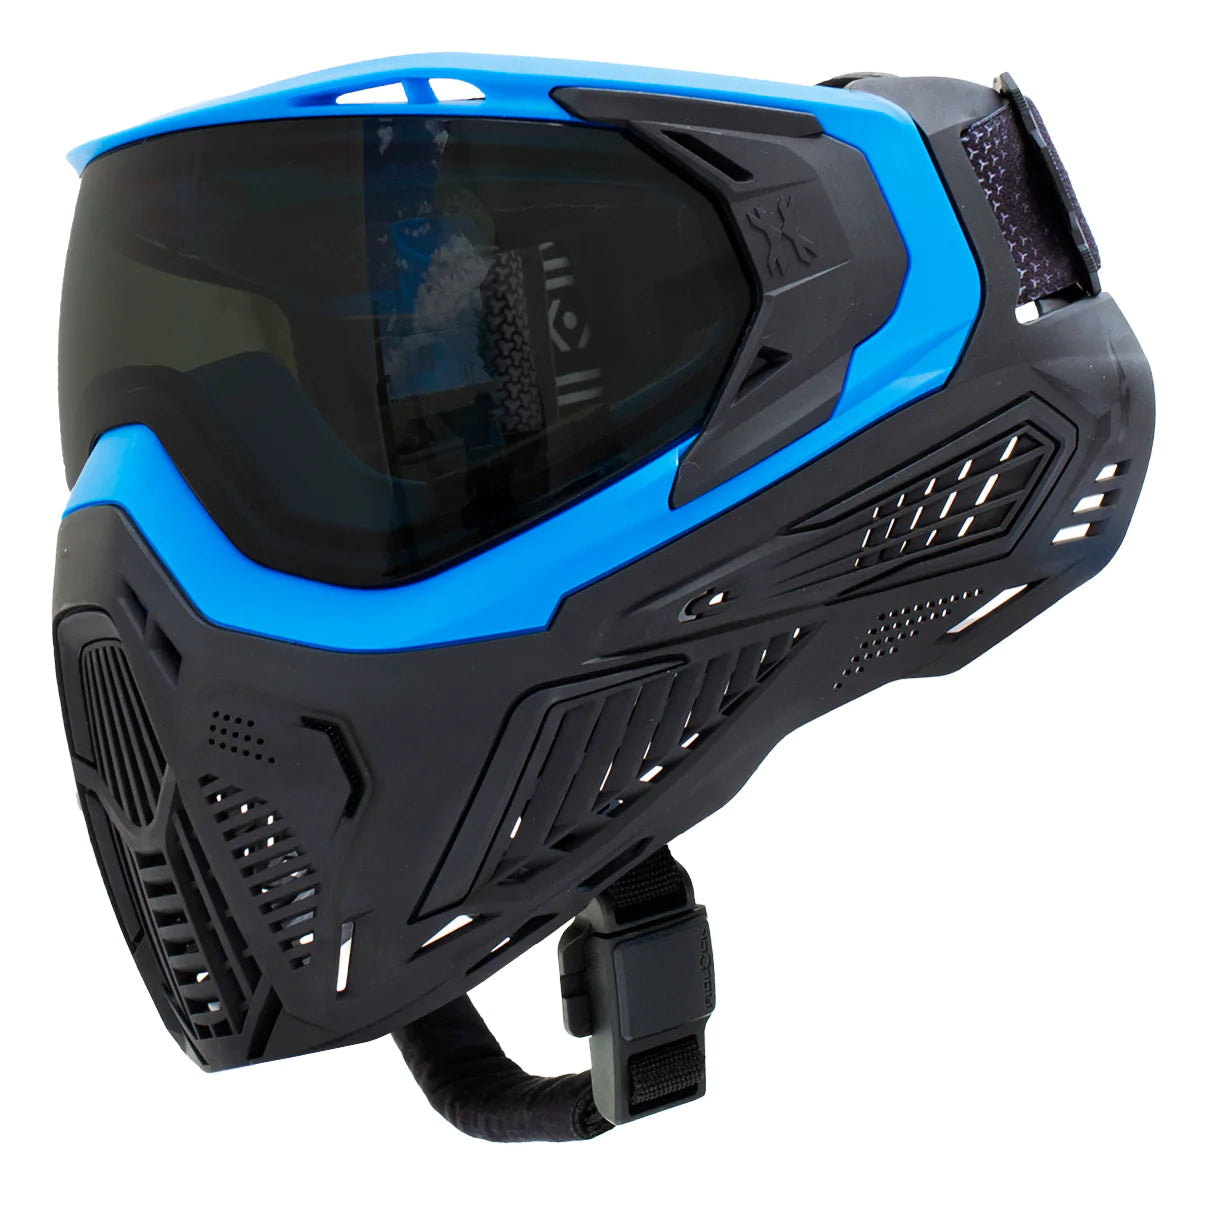 Slr Goggle - Sapphire (Blue/Black/Black) Smoke Lens | Paintball Goggle | Mask | Hk Army